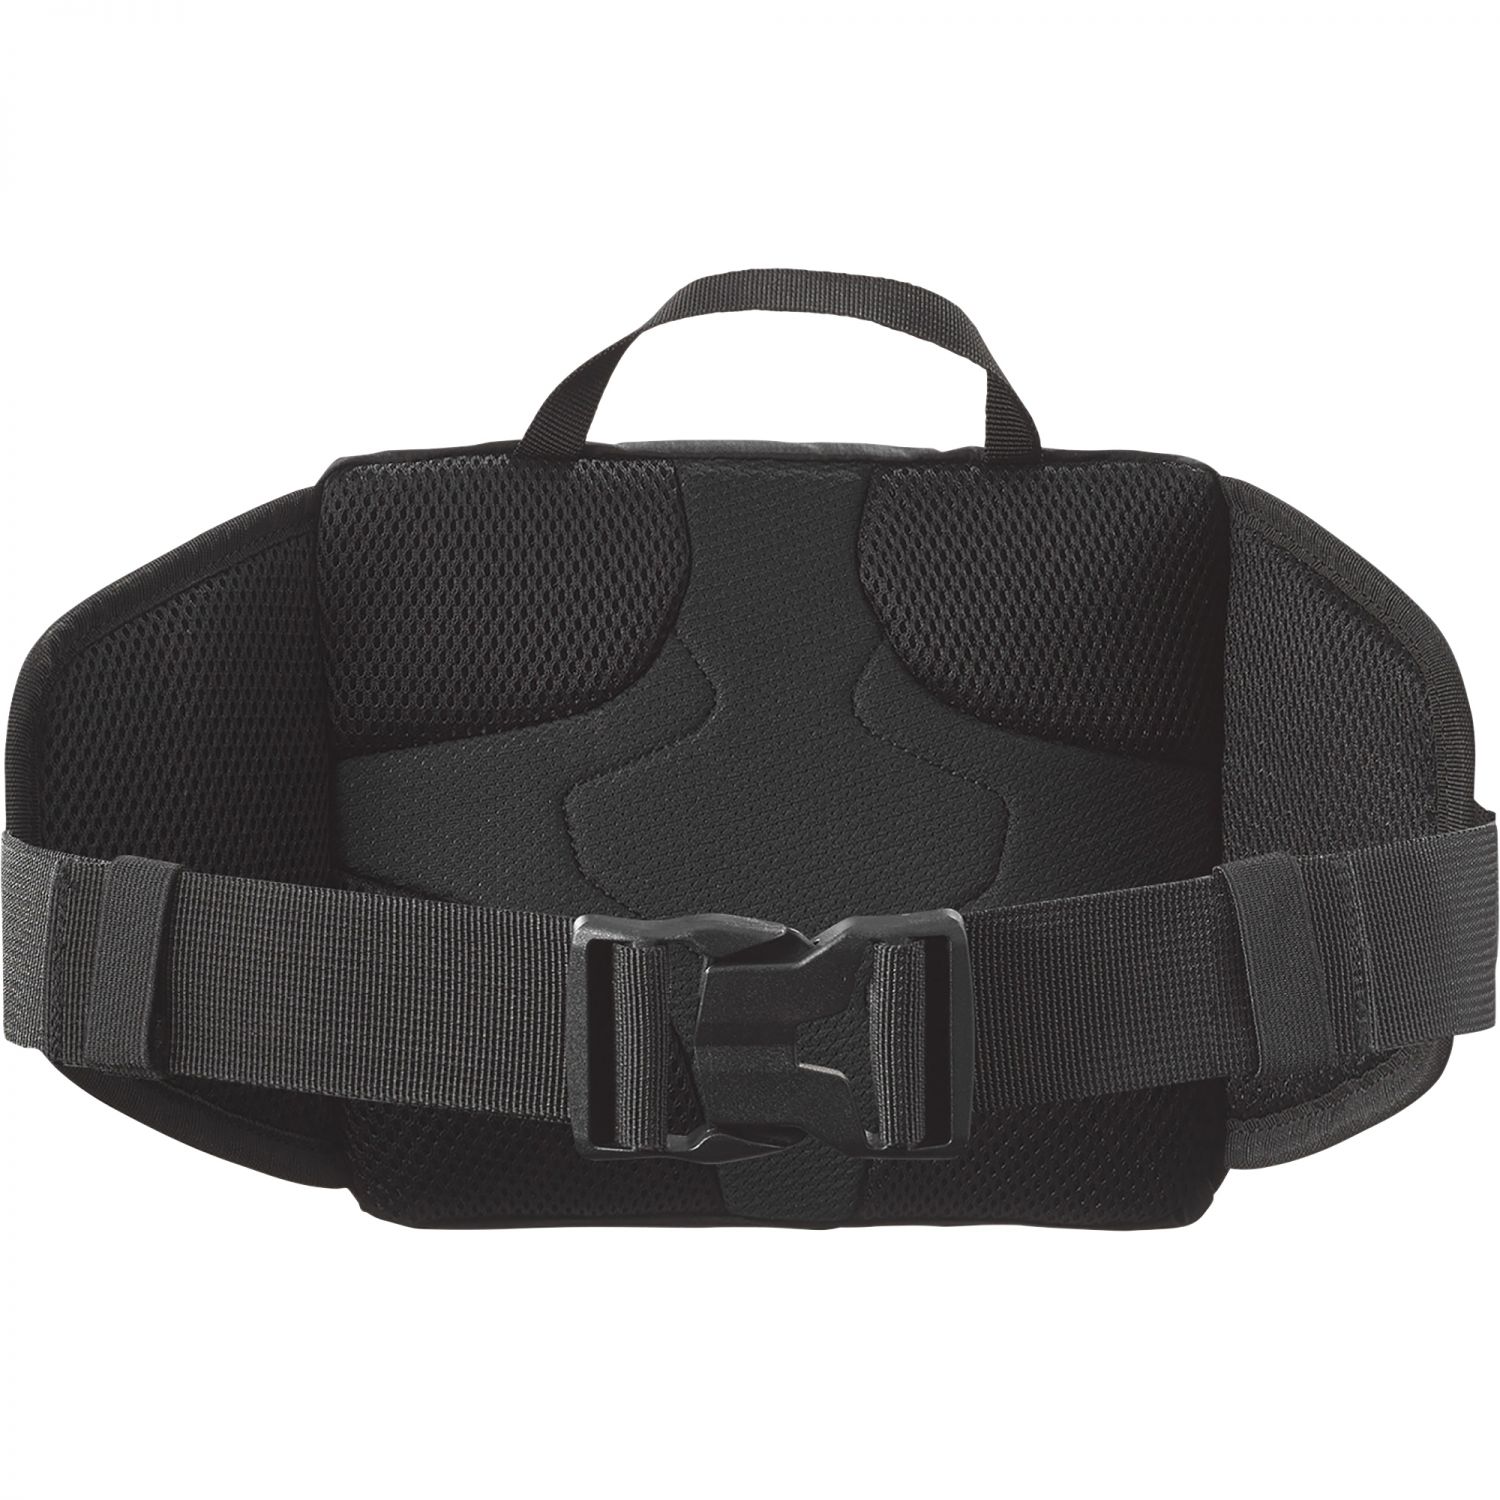 Salomon Trailblazer Belt, black/alloy